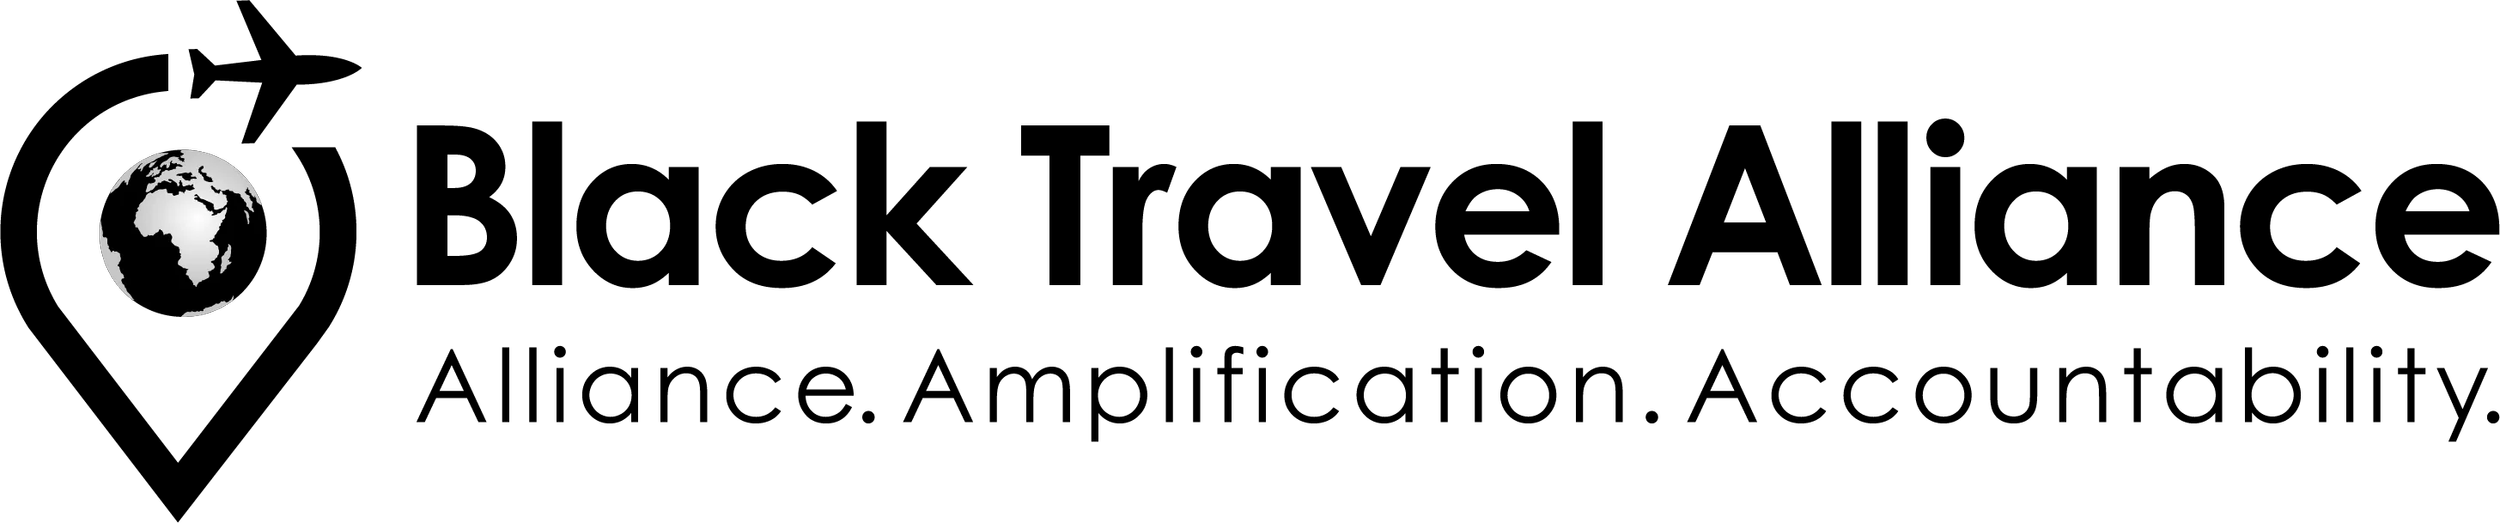 black travel alliance logo.png